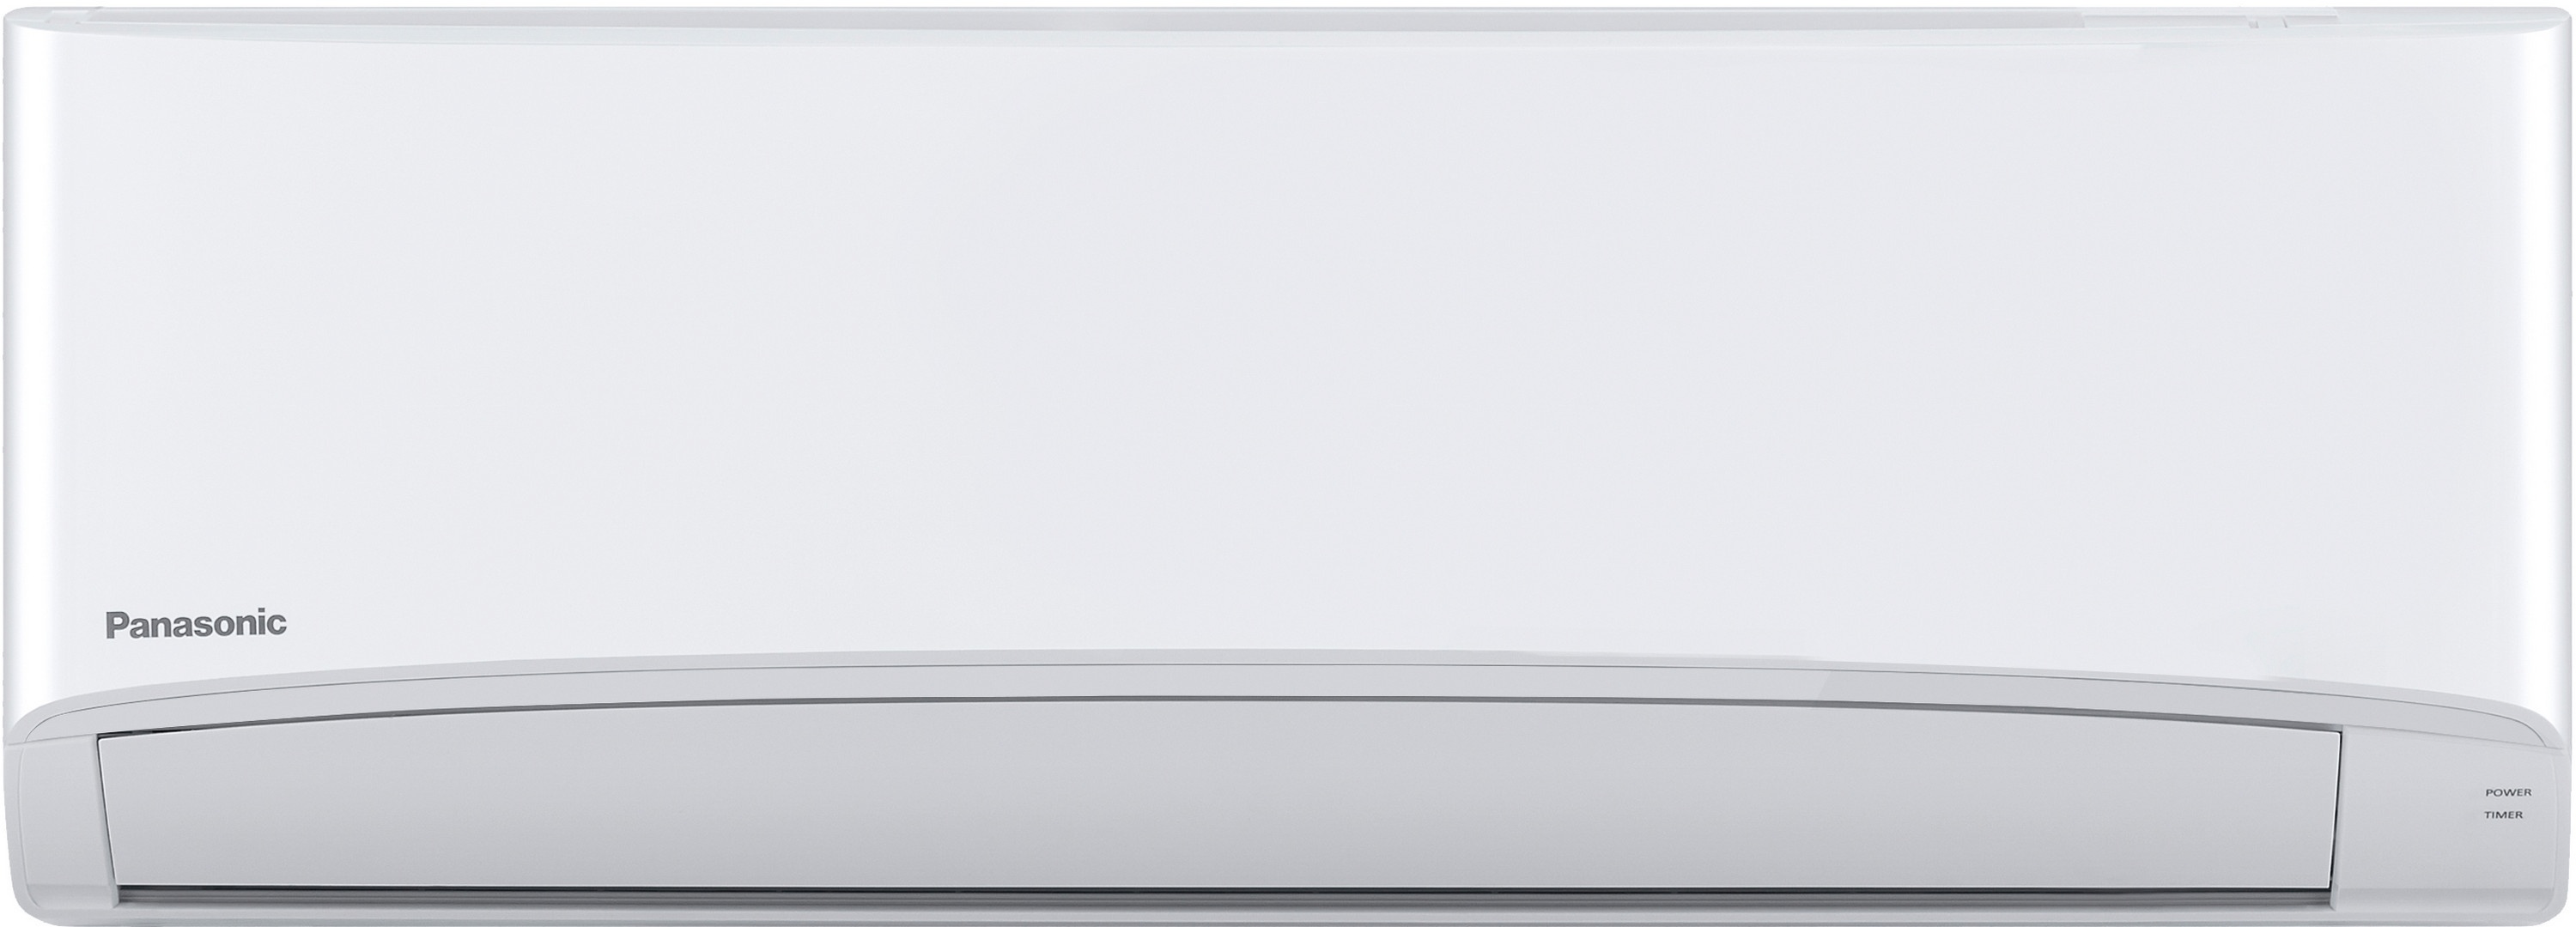 Кондиционер сплит-система Panasonic Compact Inverter CS/CU-TZ60TKEW цена 73999.00 грн - фотография 2